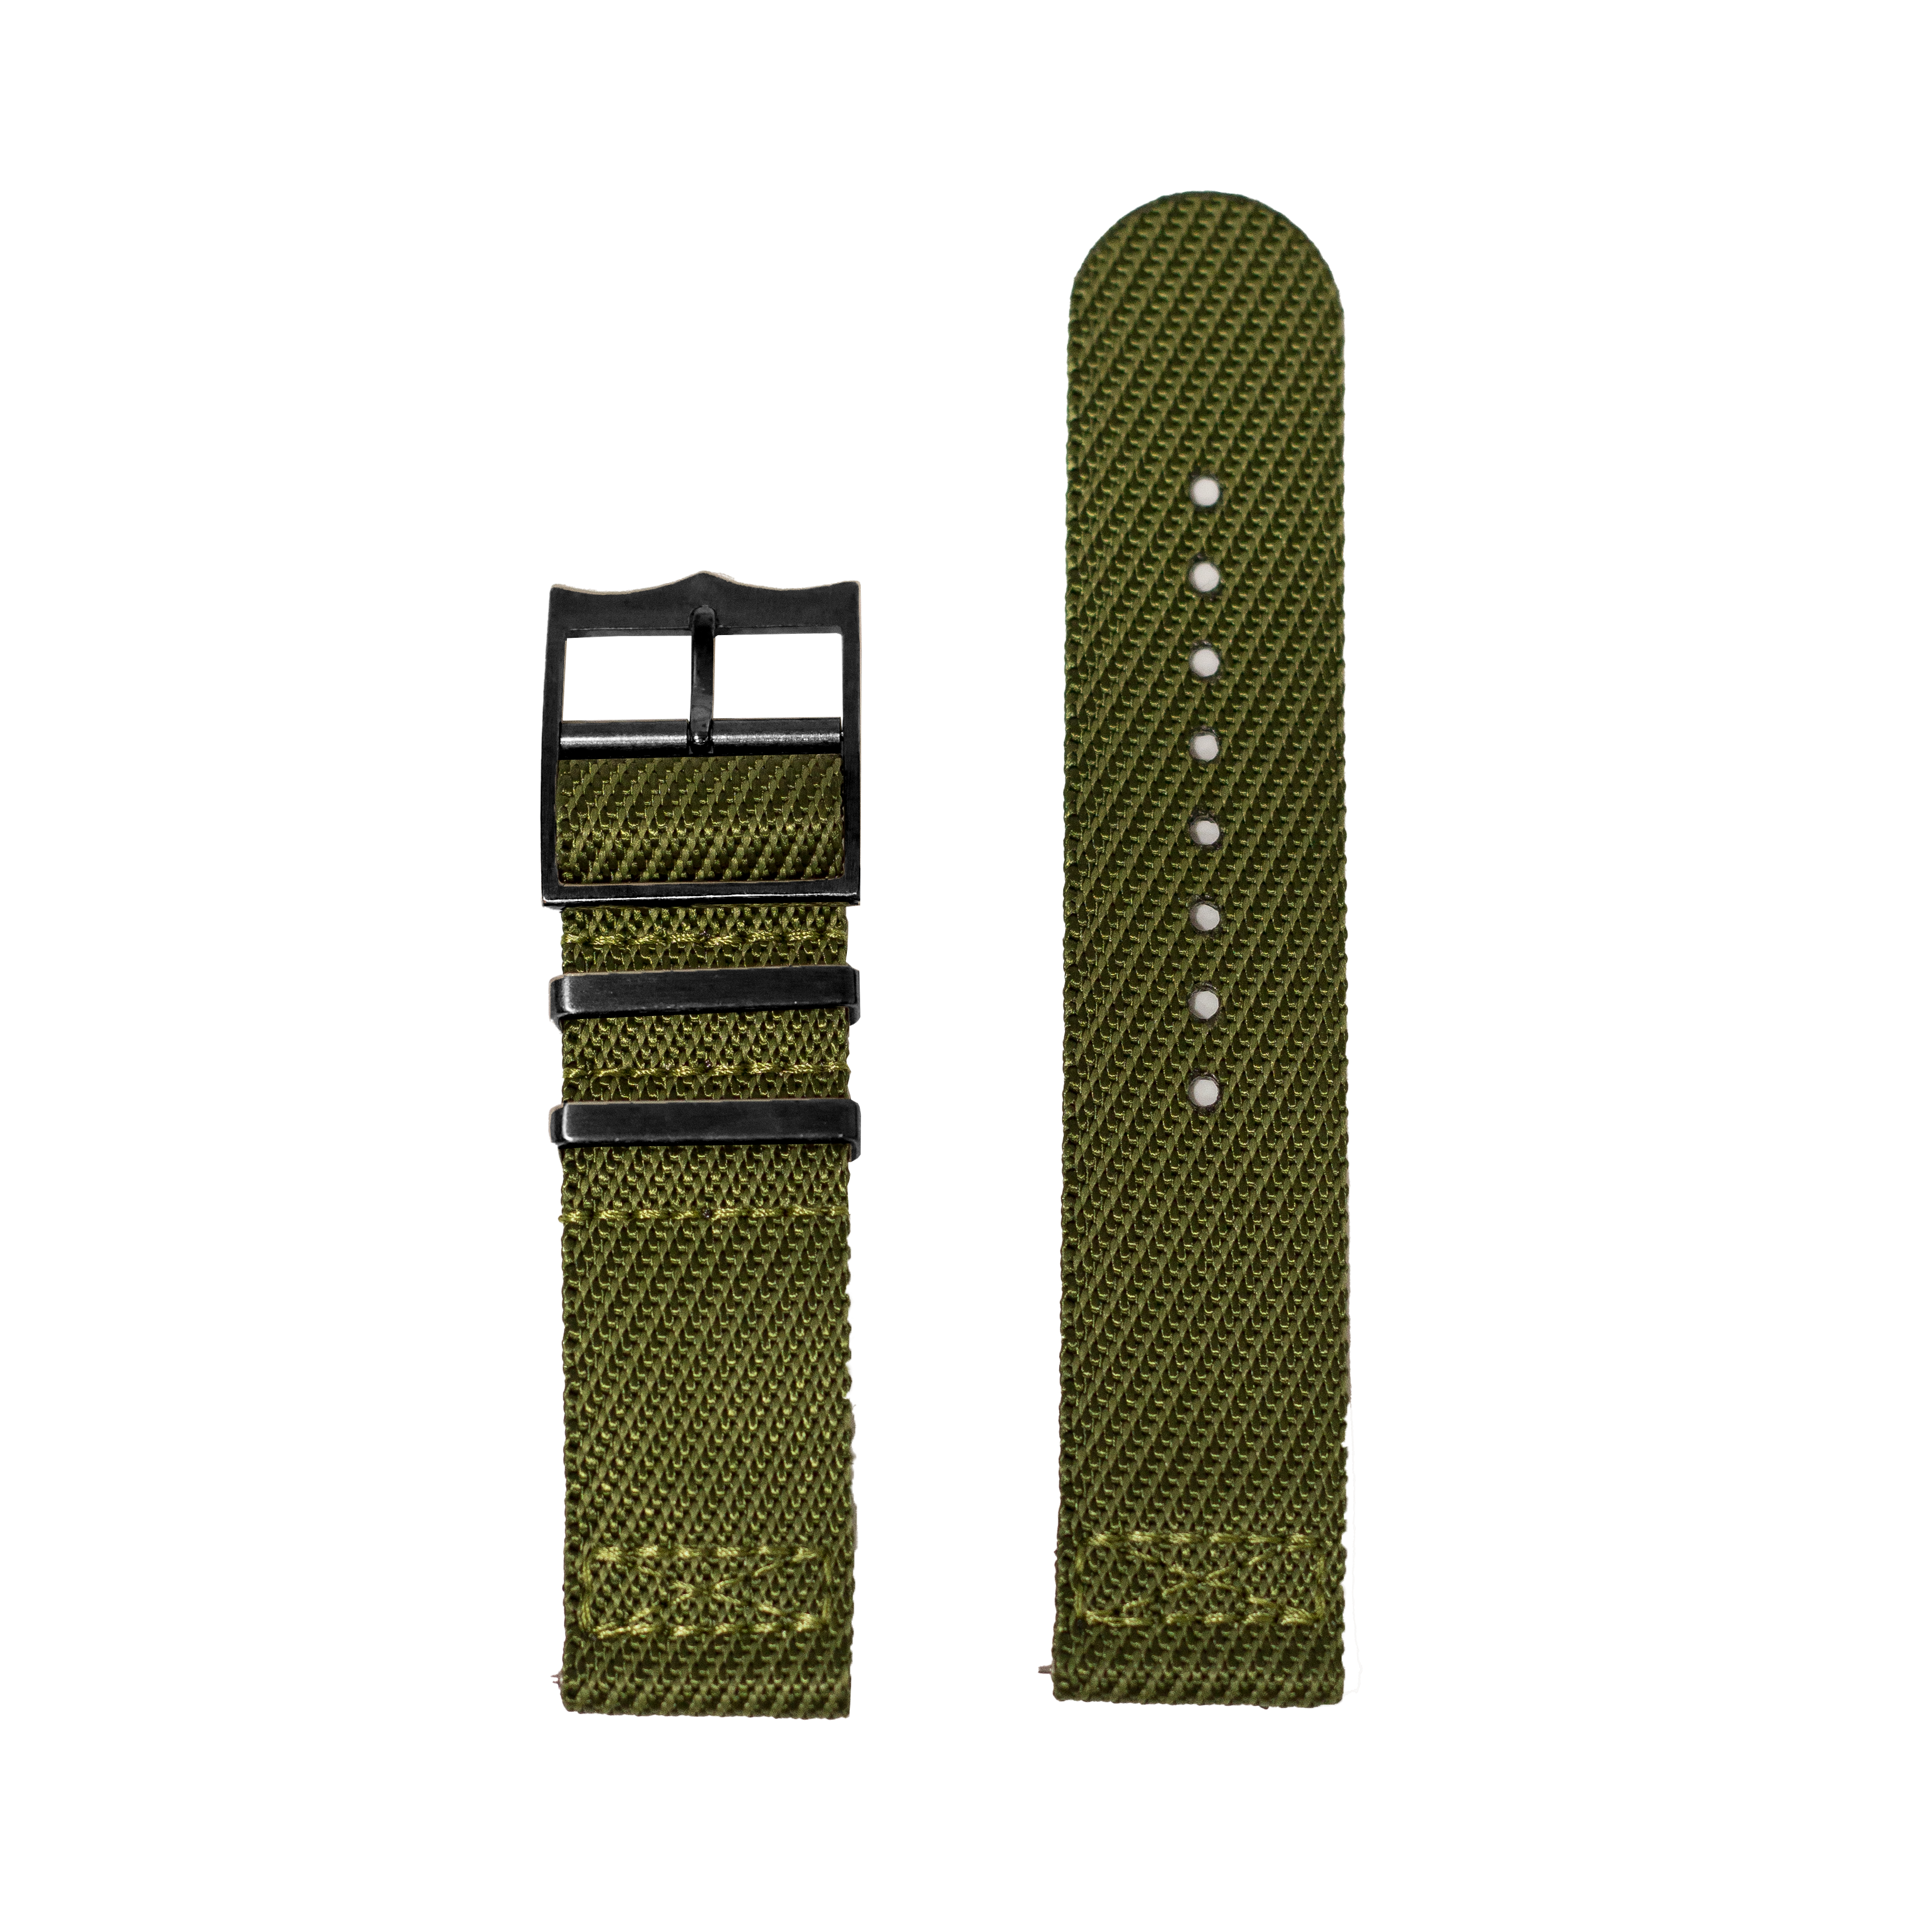 [Apple Watch] Cross Militex - Army Green [Black Hardware]